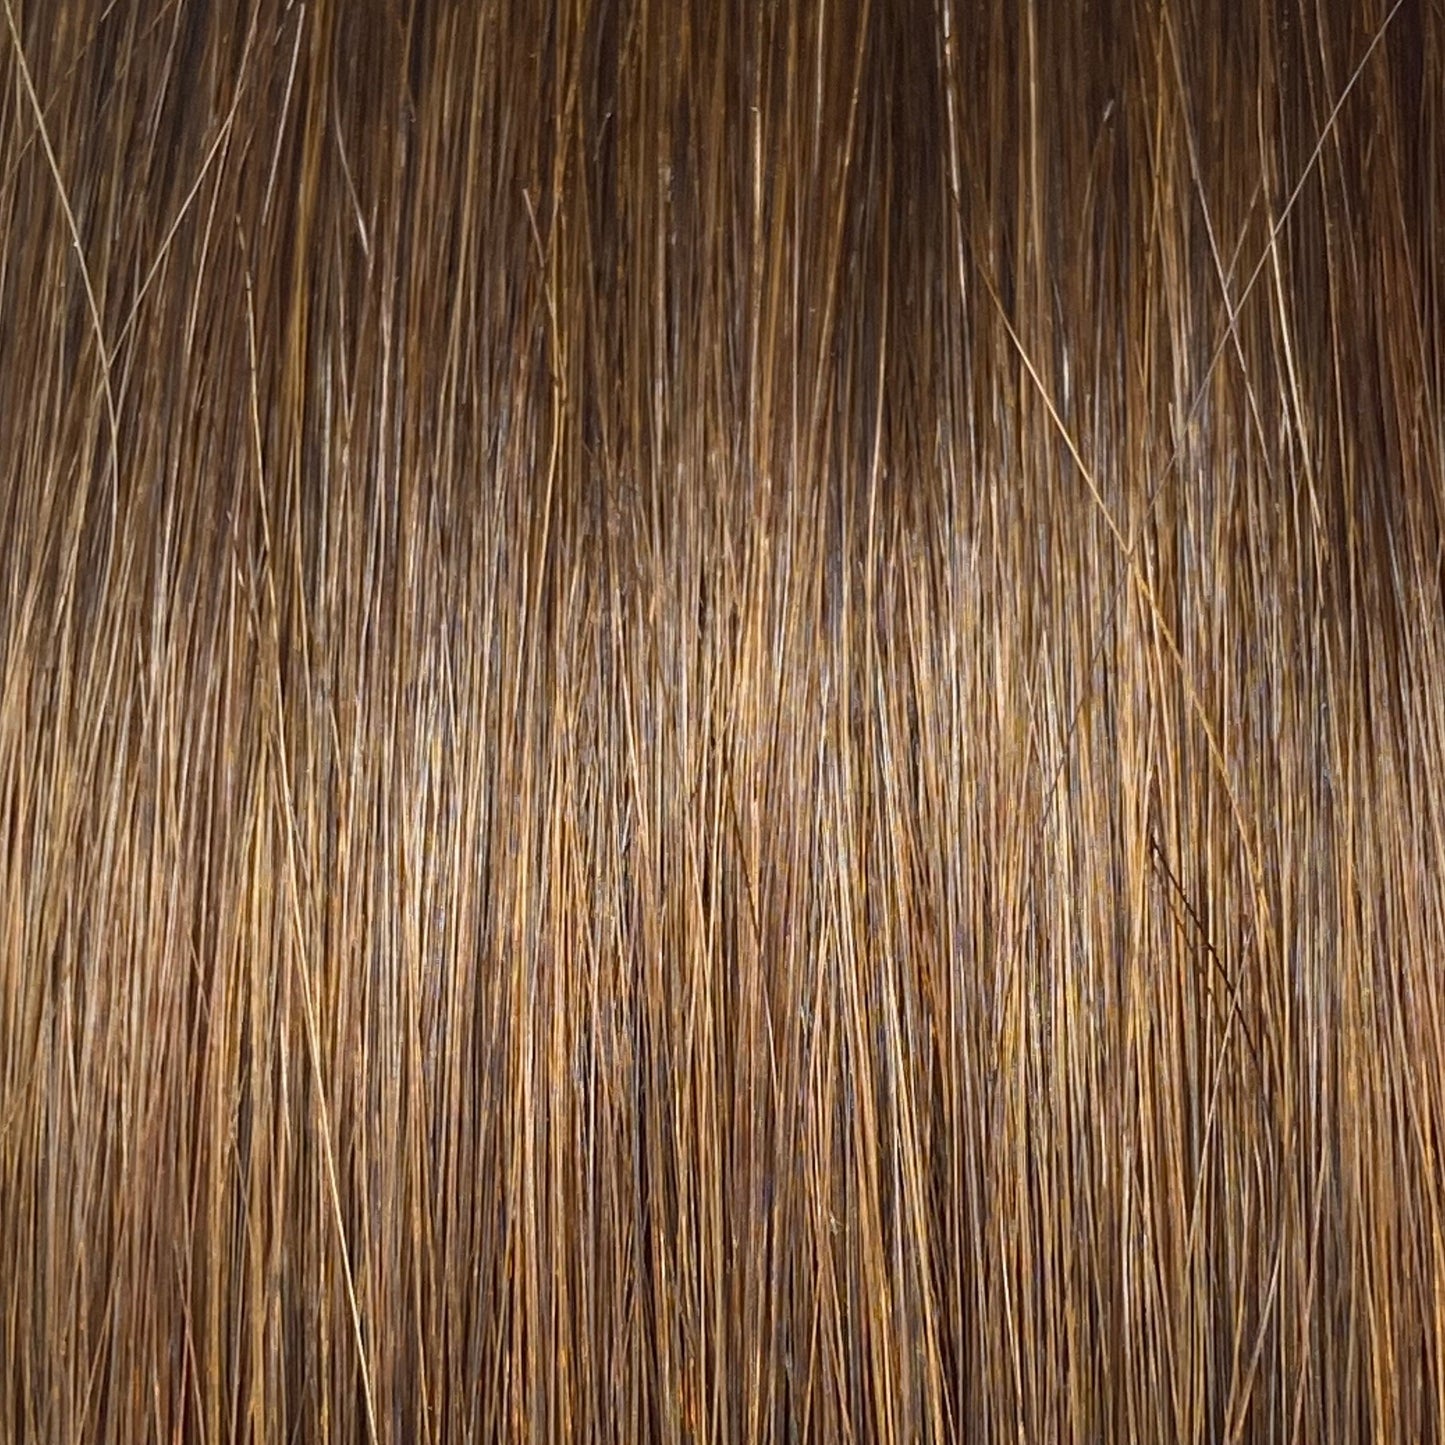 Fusion hair extensions #4 - 50cm/20 inches - Chestnut Fusion Euro So Cap 